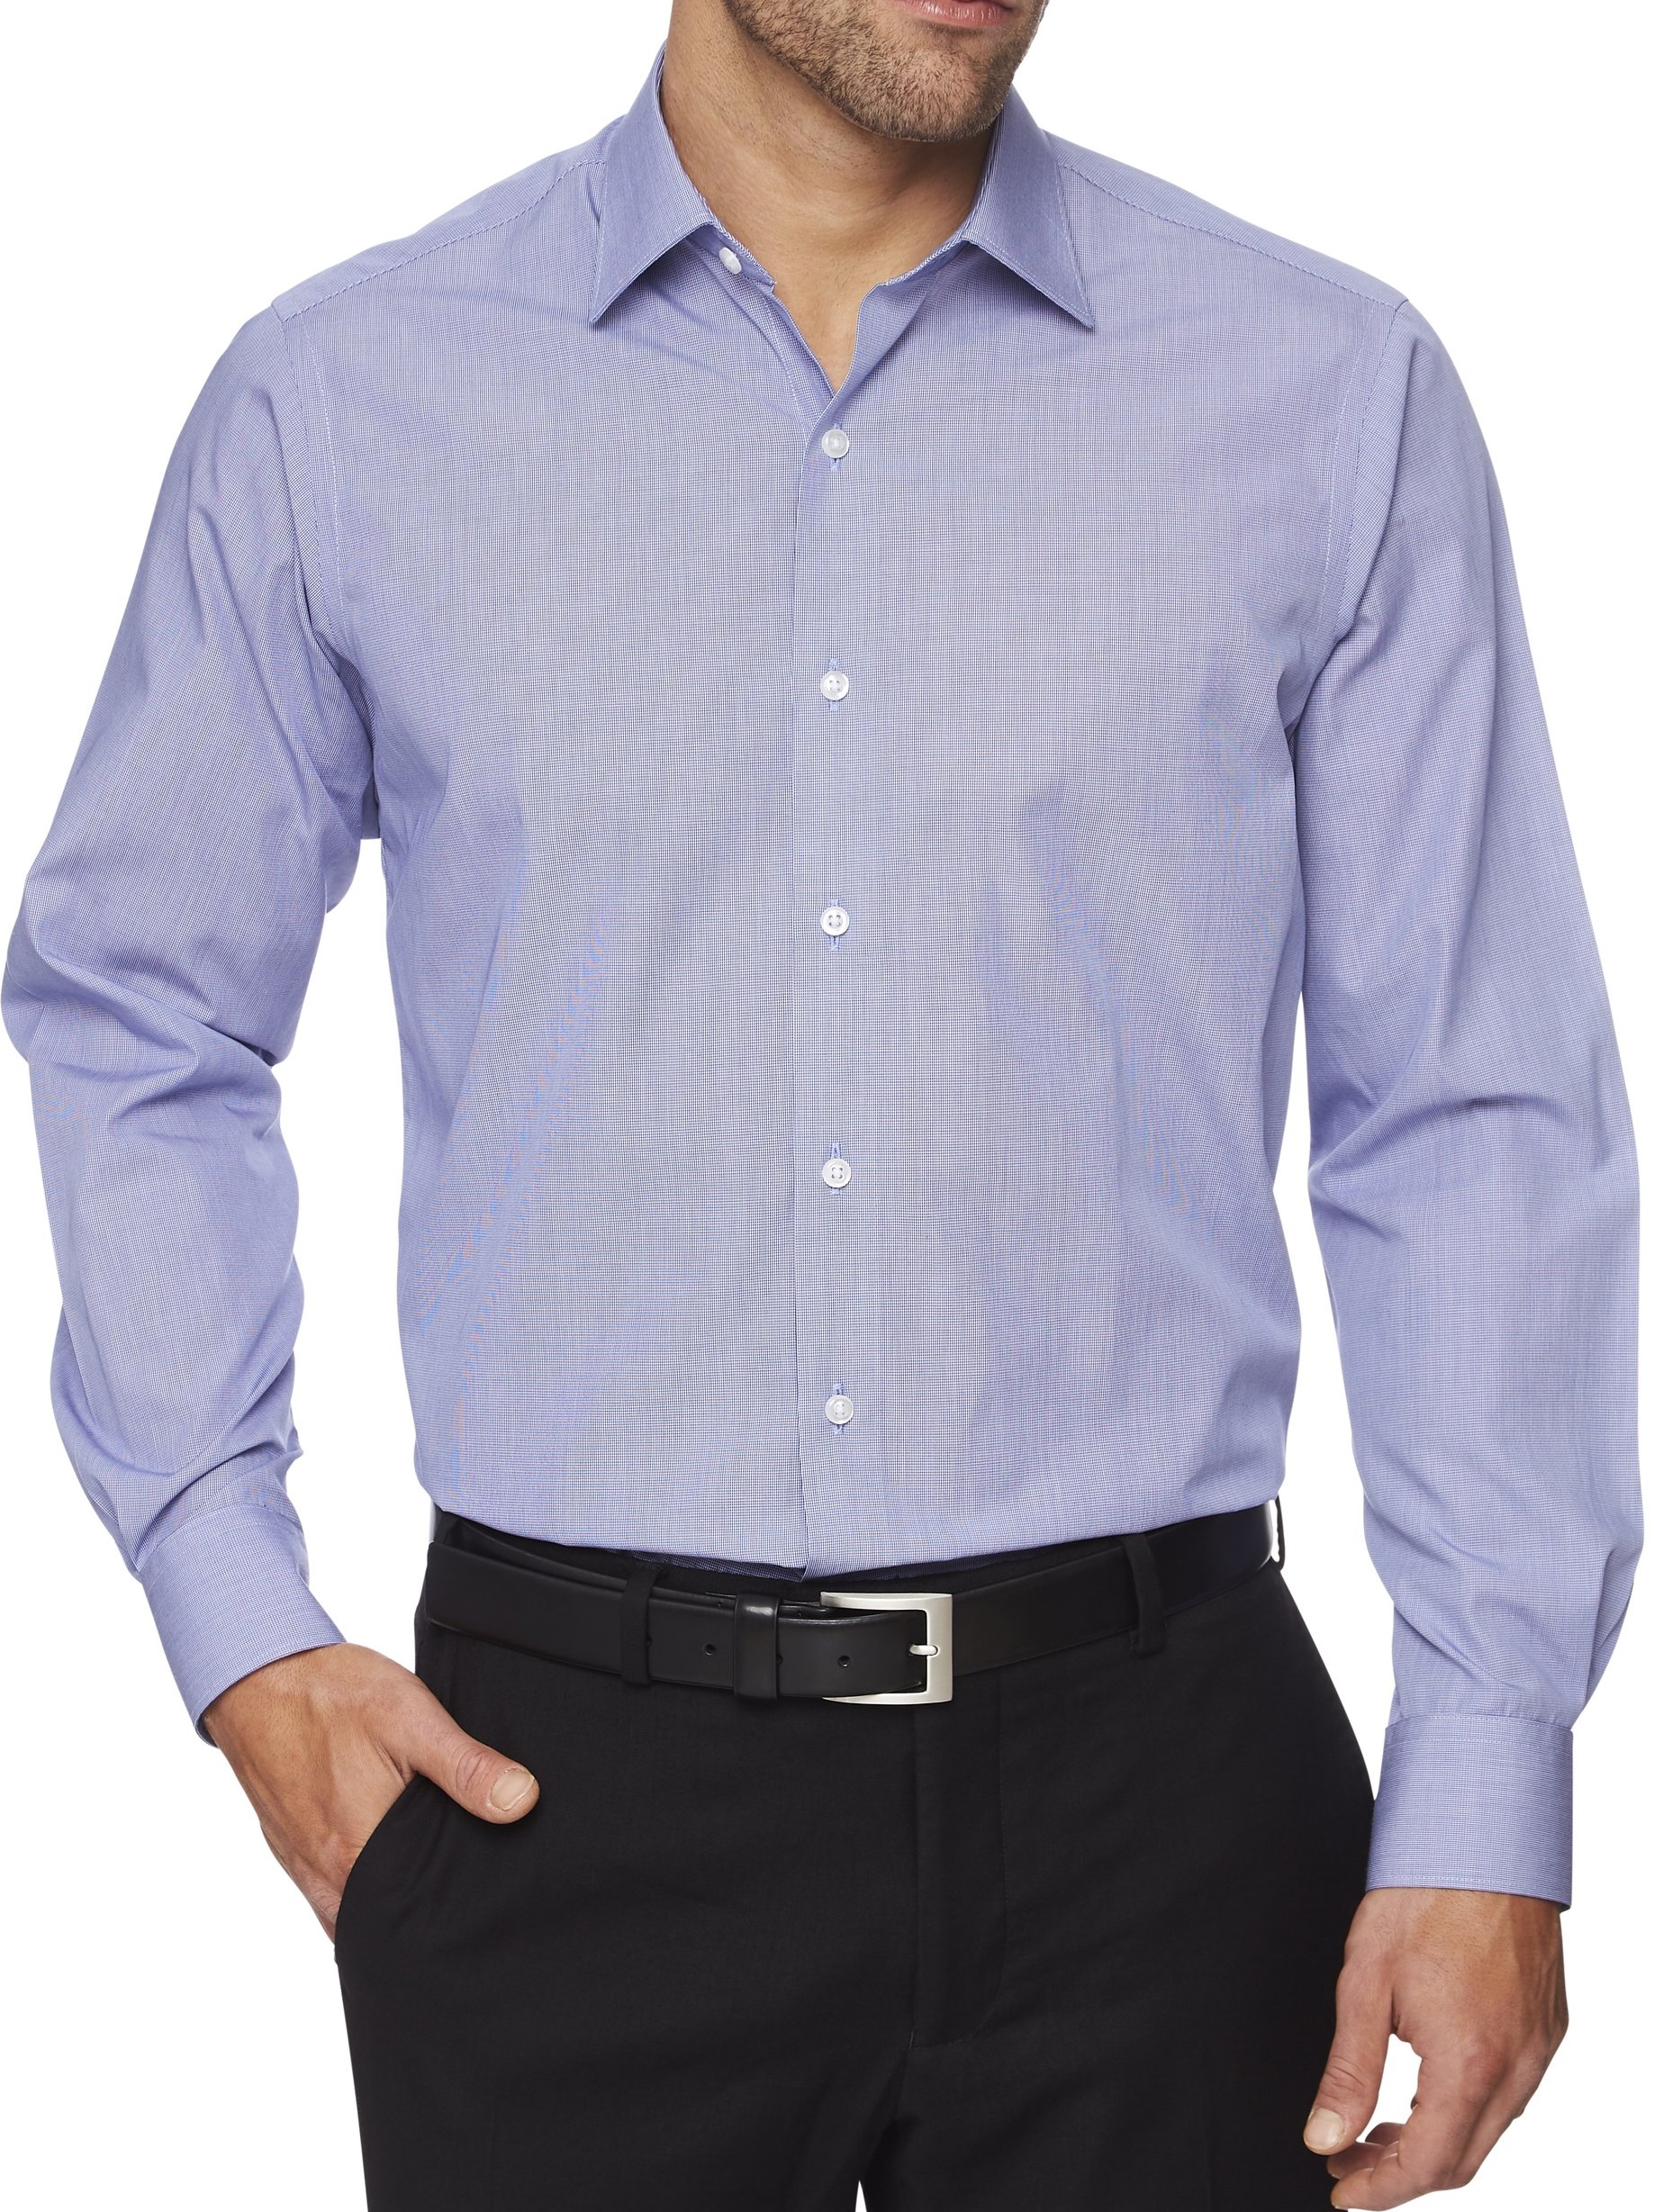 Ganton Shirts Essentials City Tailored Fit Navy Business Shirts